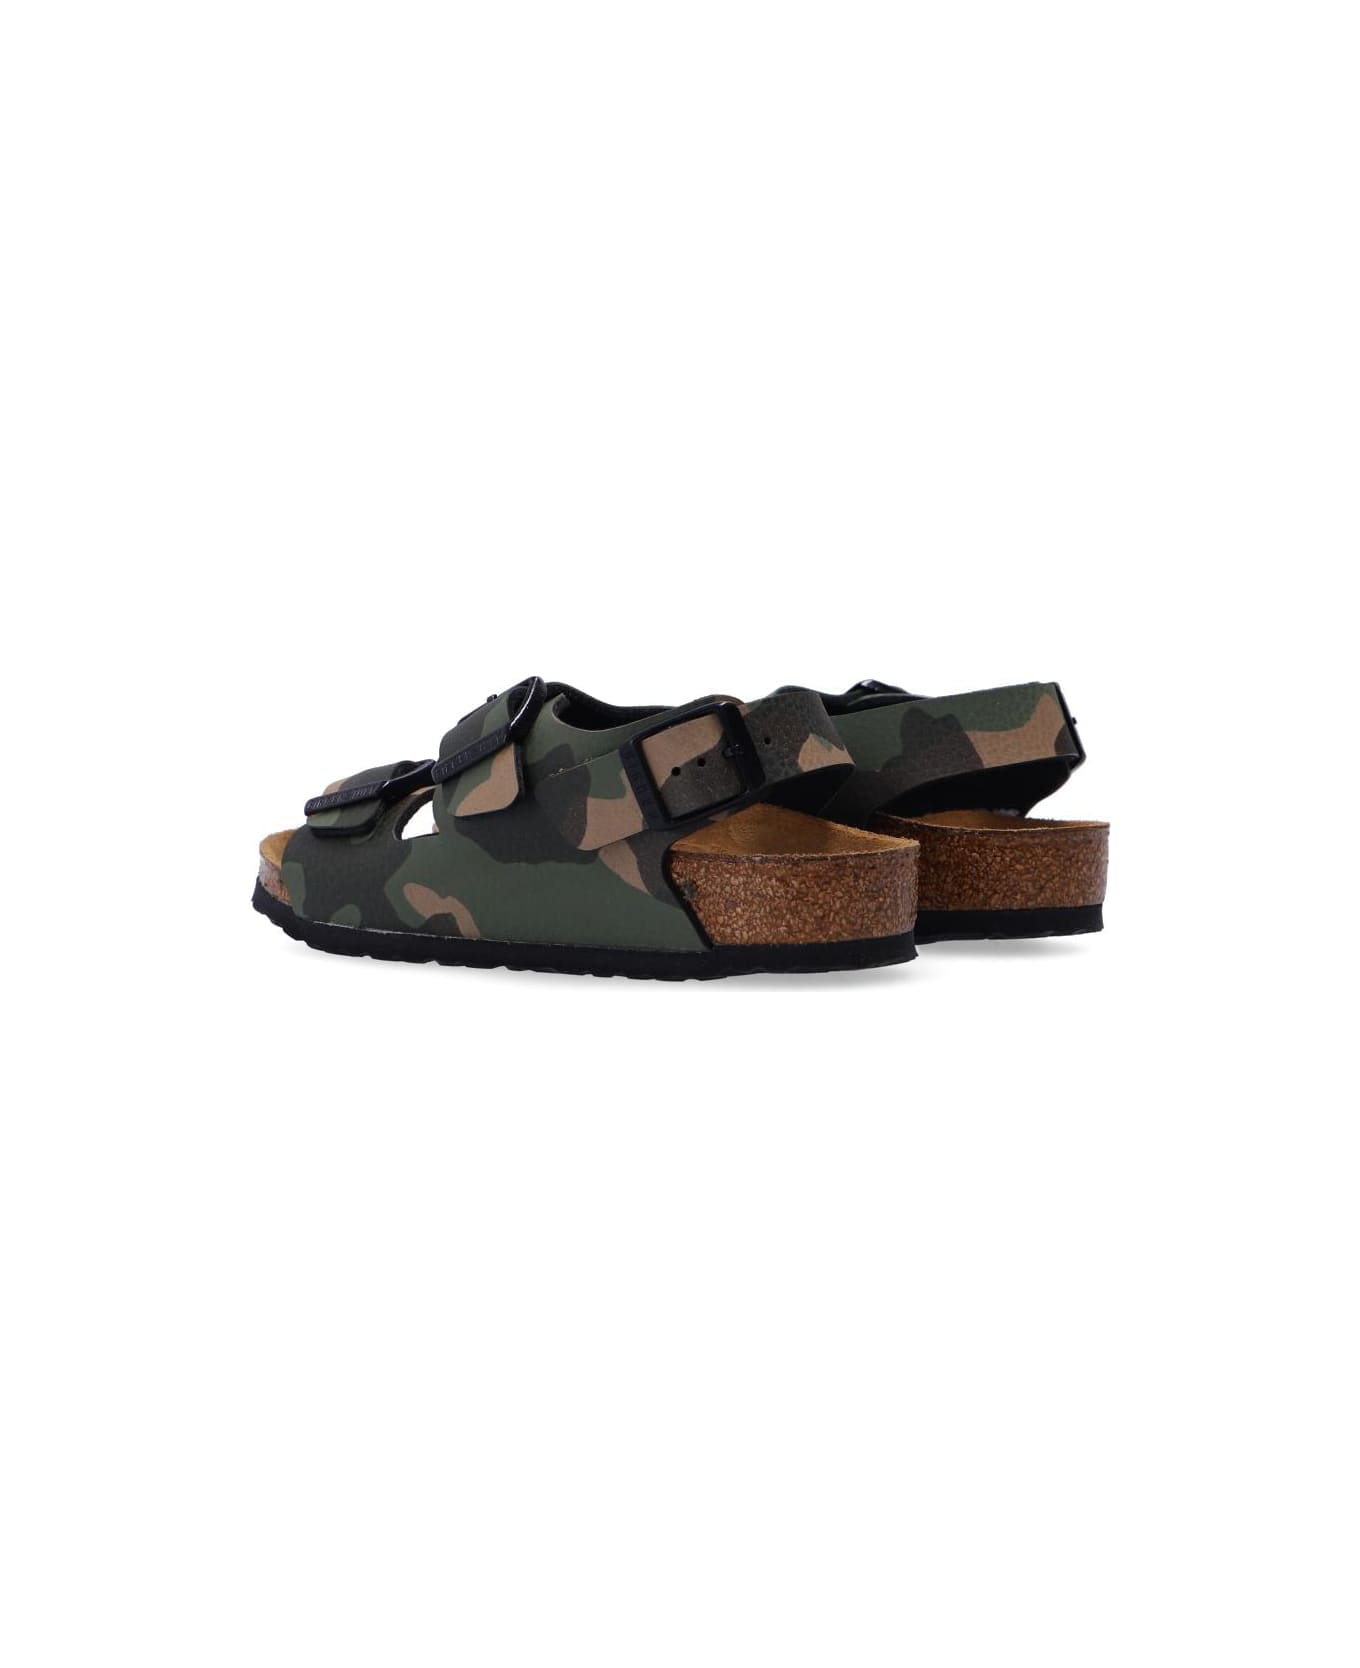 Birkenstock 'milano Kinder' Sandals - Soil Camouflage Green シューズ